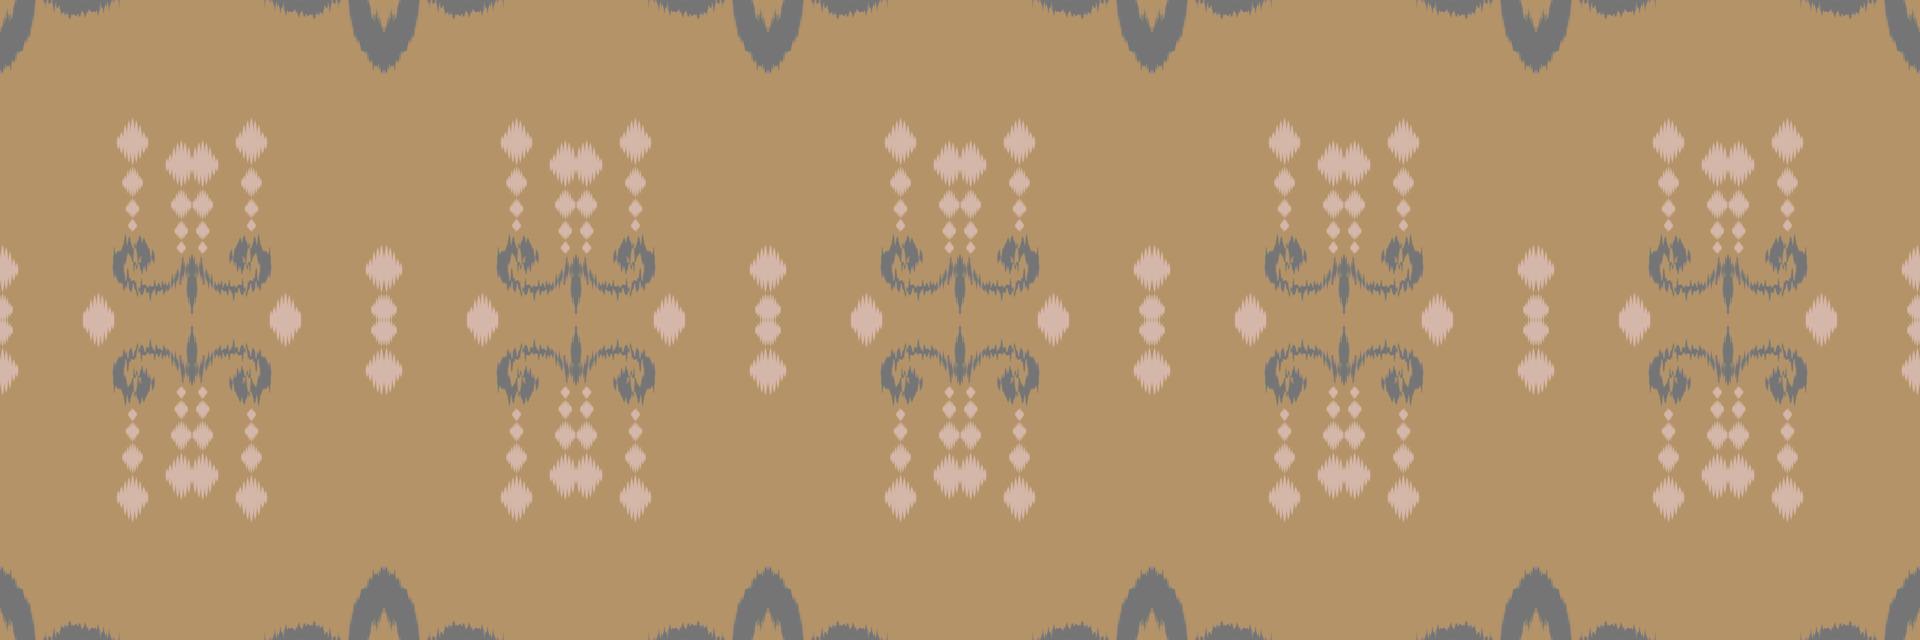 motiv ikat textur batik textil nahtloses muster digitales vektordesign für druck saree kurti borneo stoff grenze pinsel symbole muster designer vektor